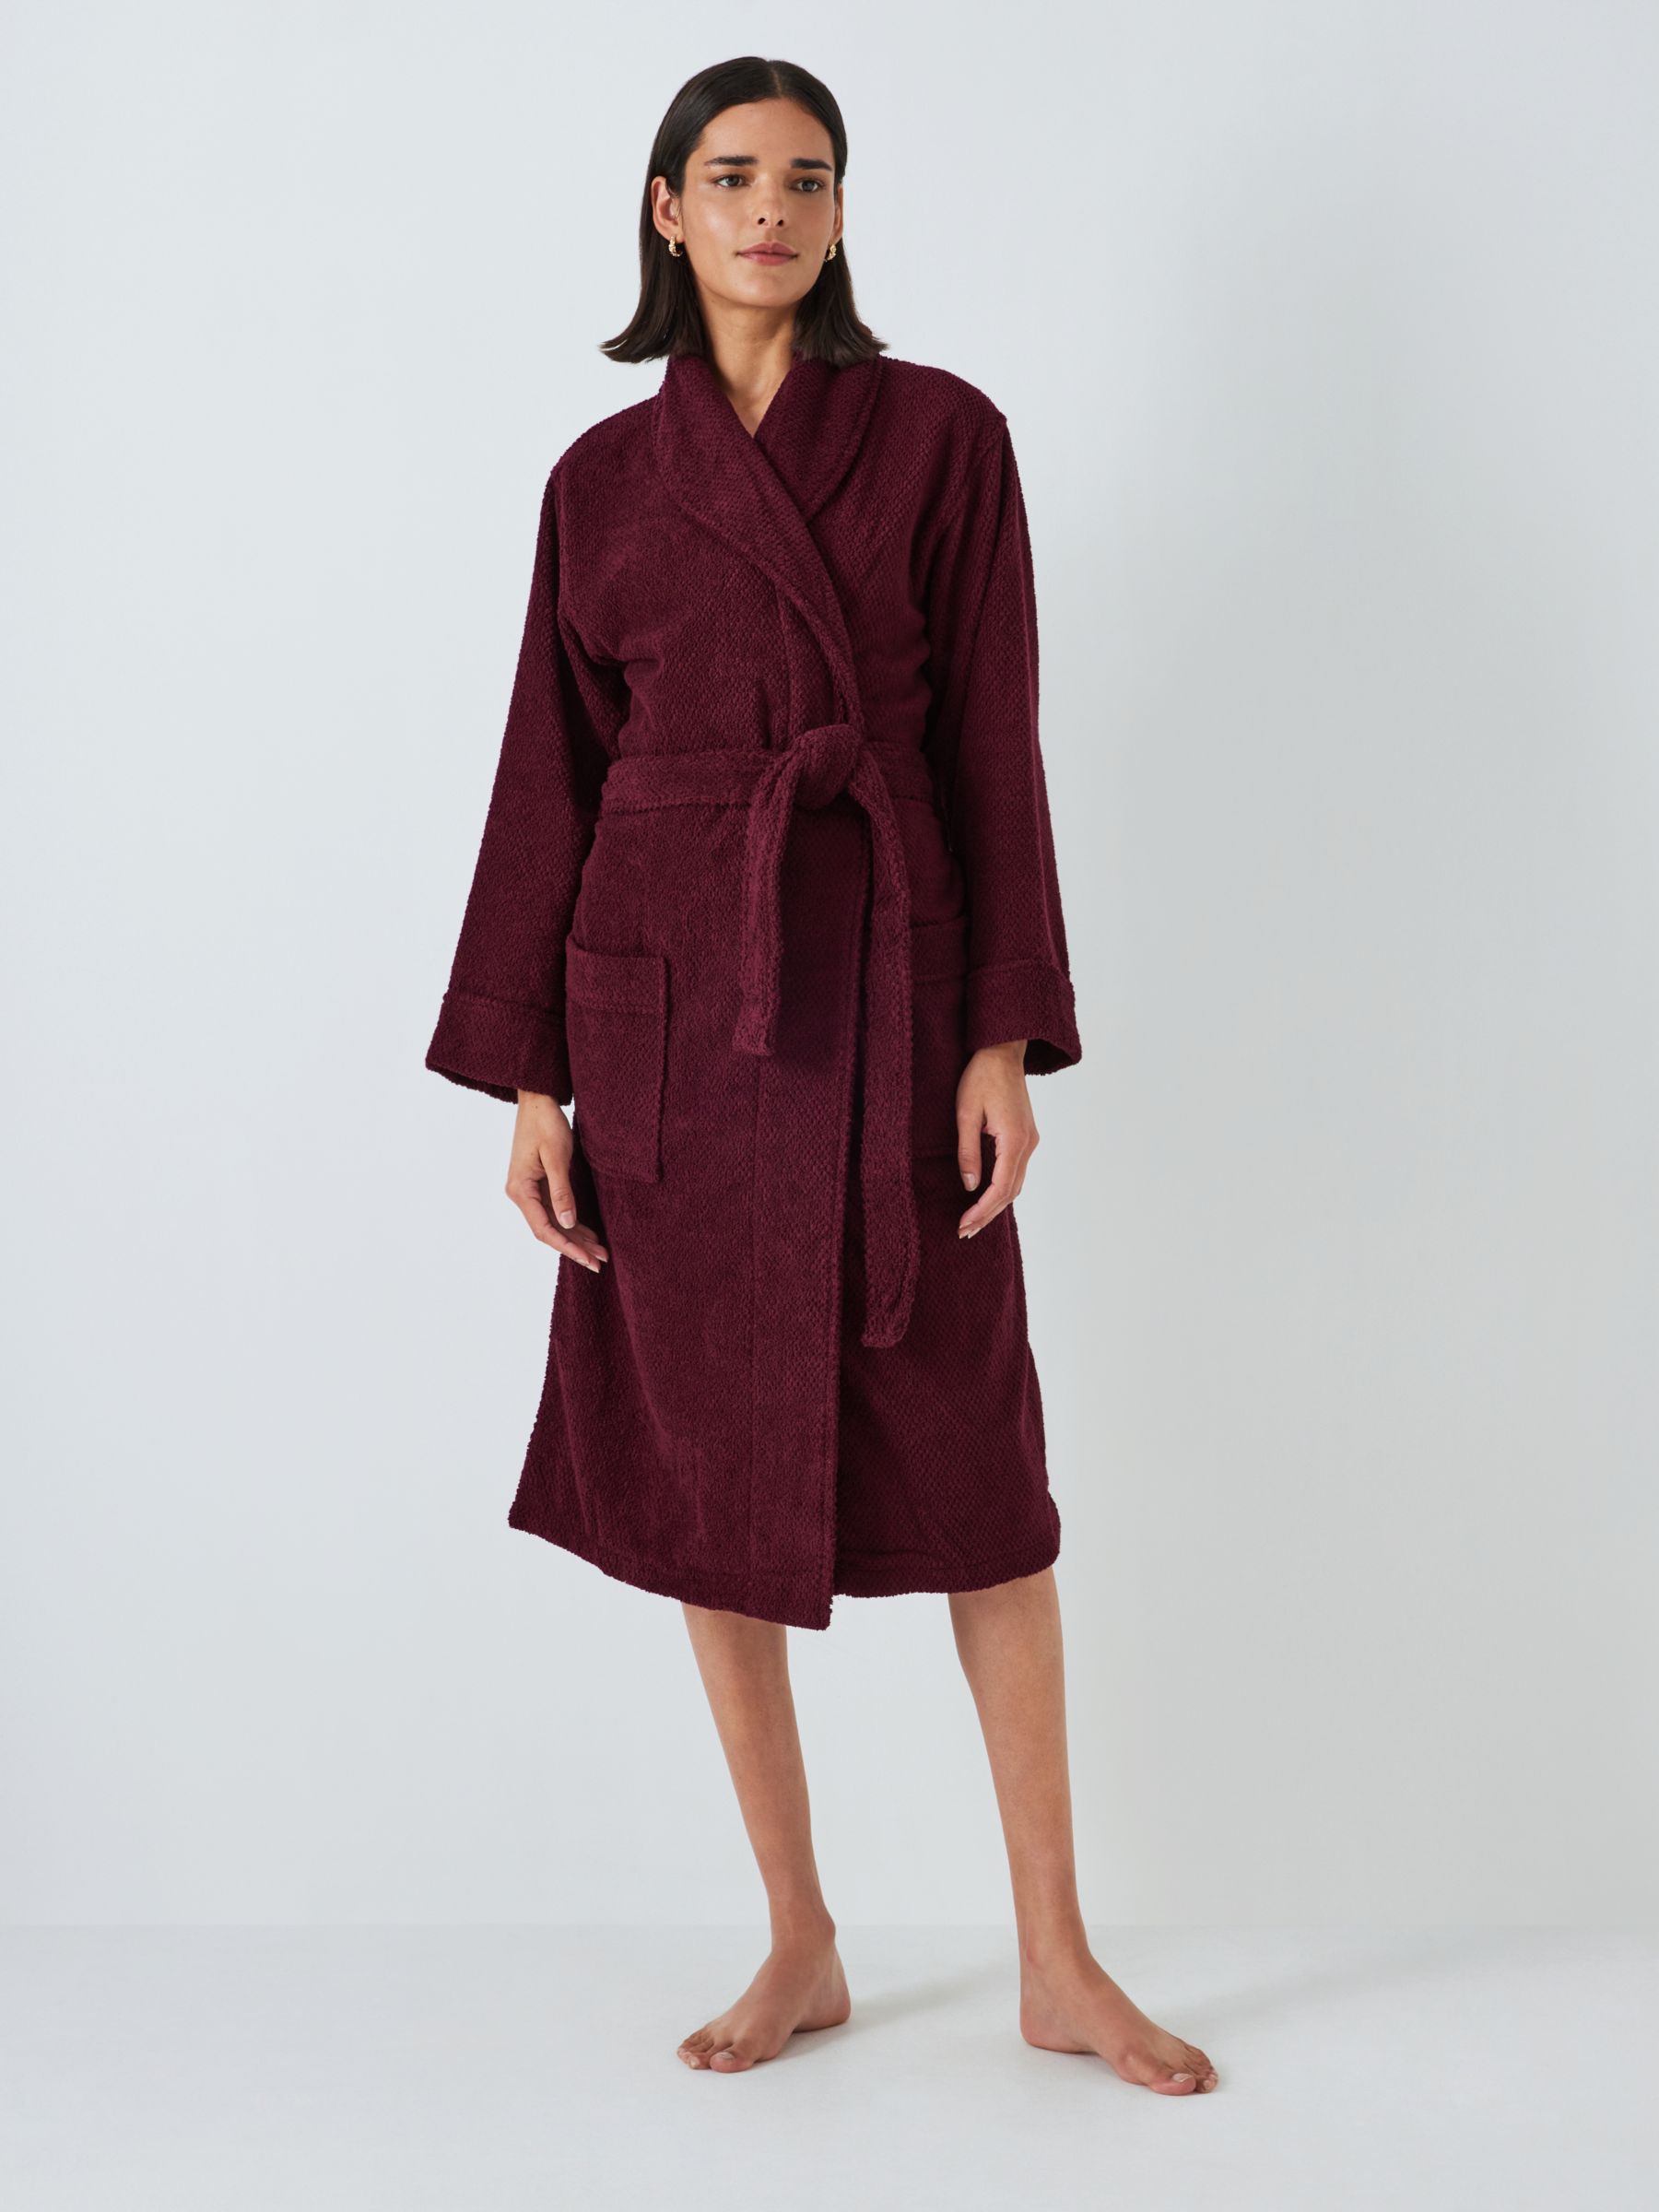 Women Silky Comfy Quarter Sleeve Knee-length robe/gown Nightwear